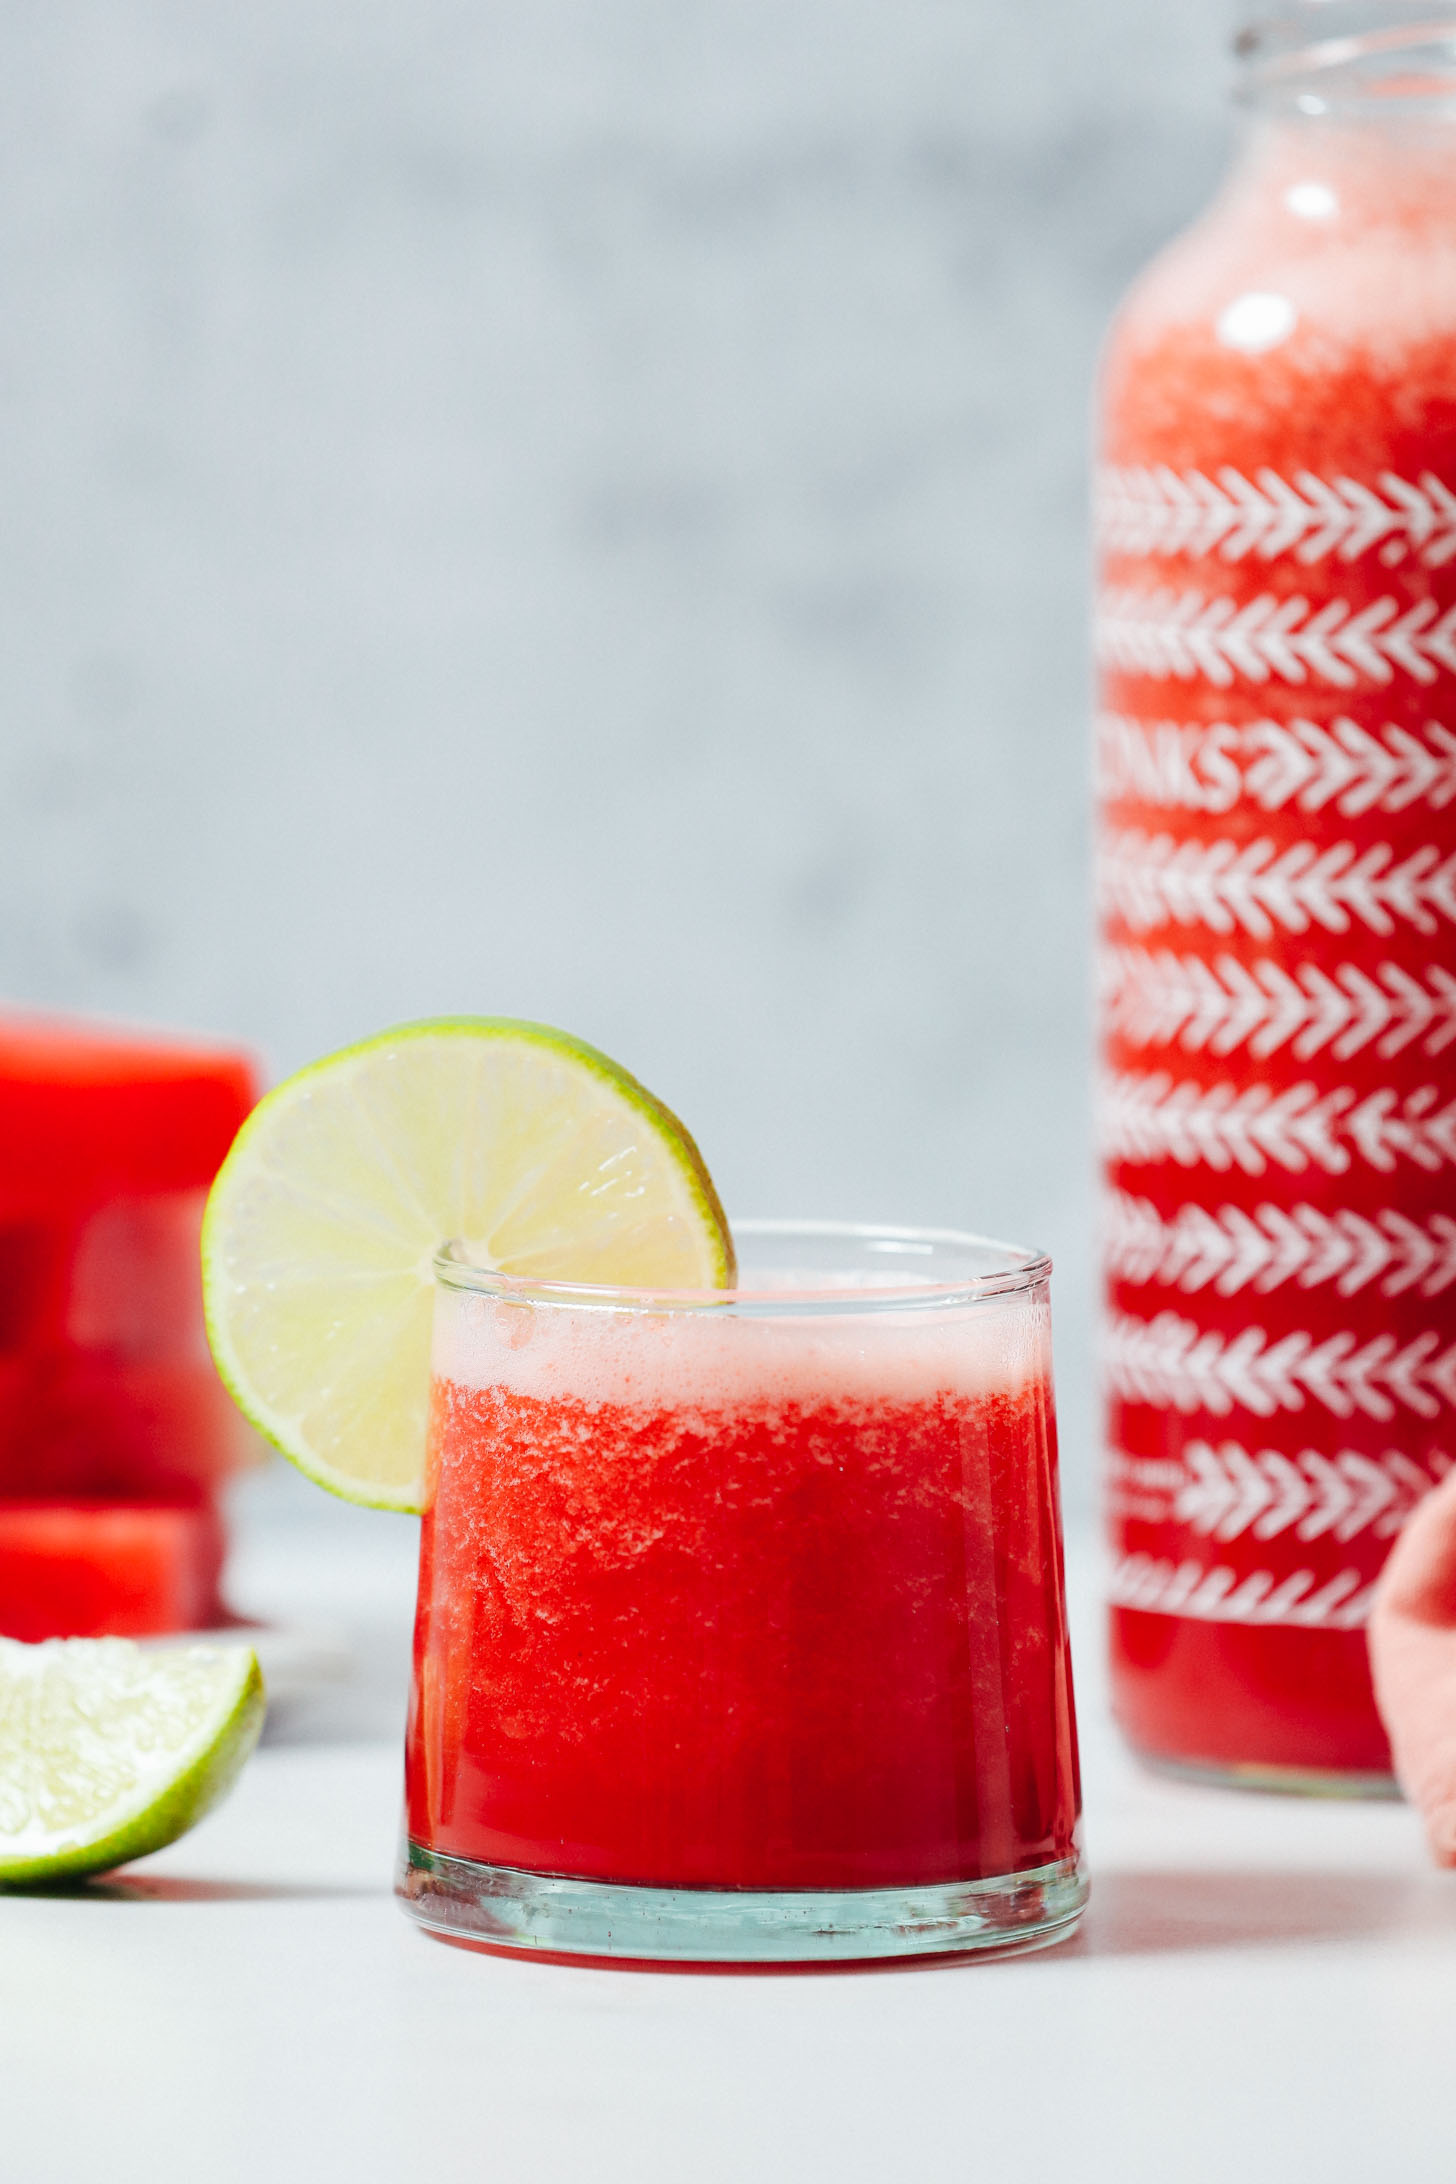 Jar and glass of homemade watermelon juice